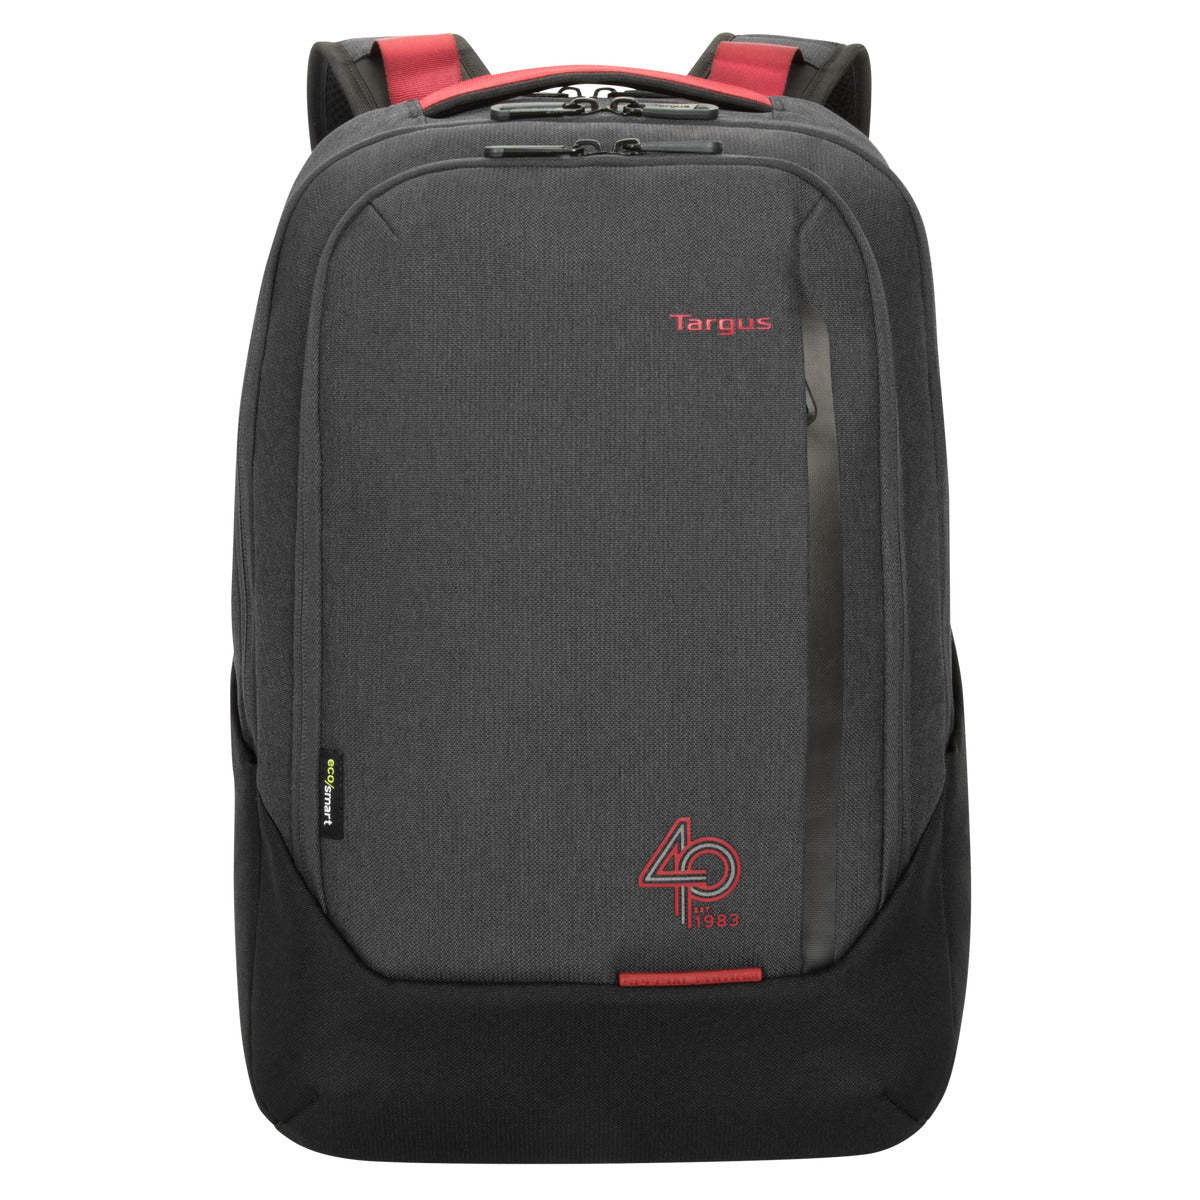 Bags | Protective Cases & | Targus Cases Laptop Laptop